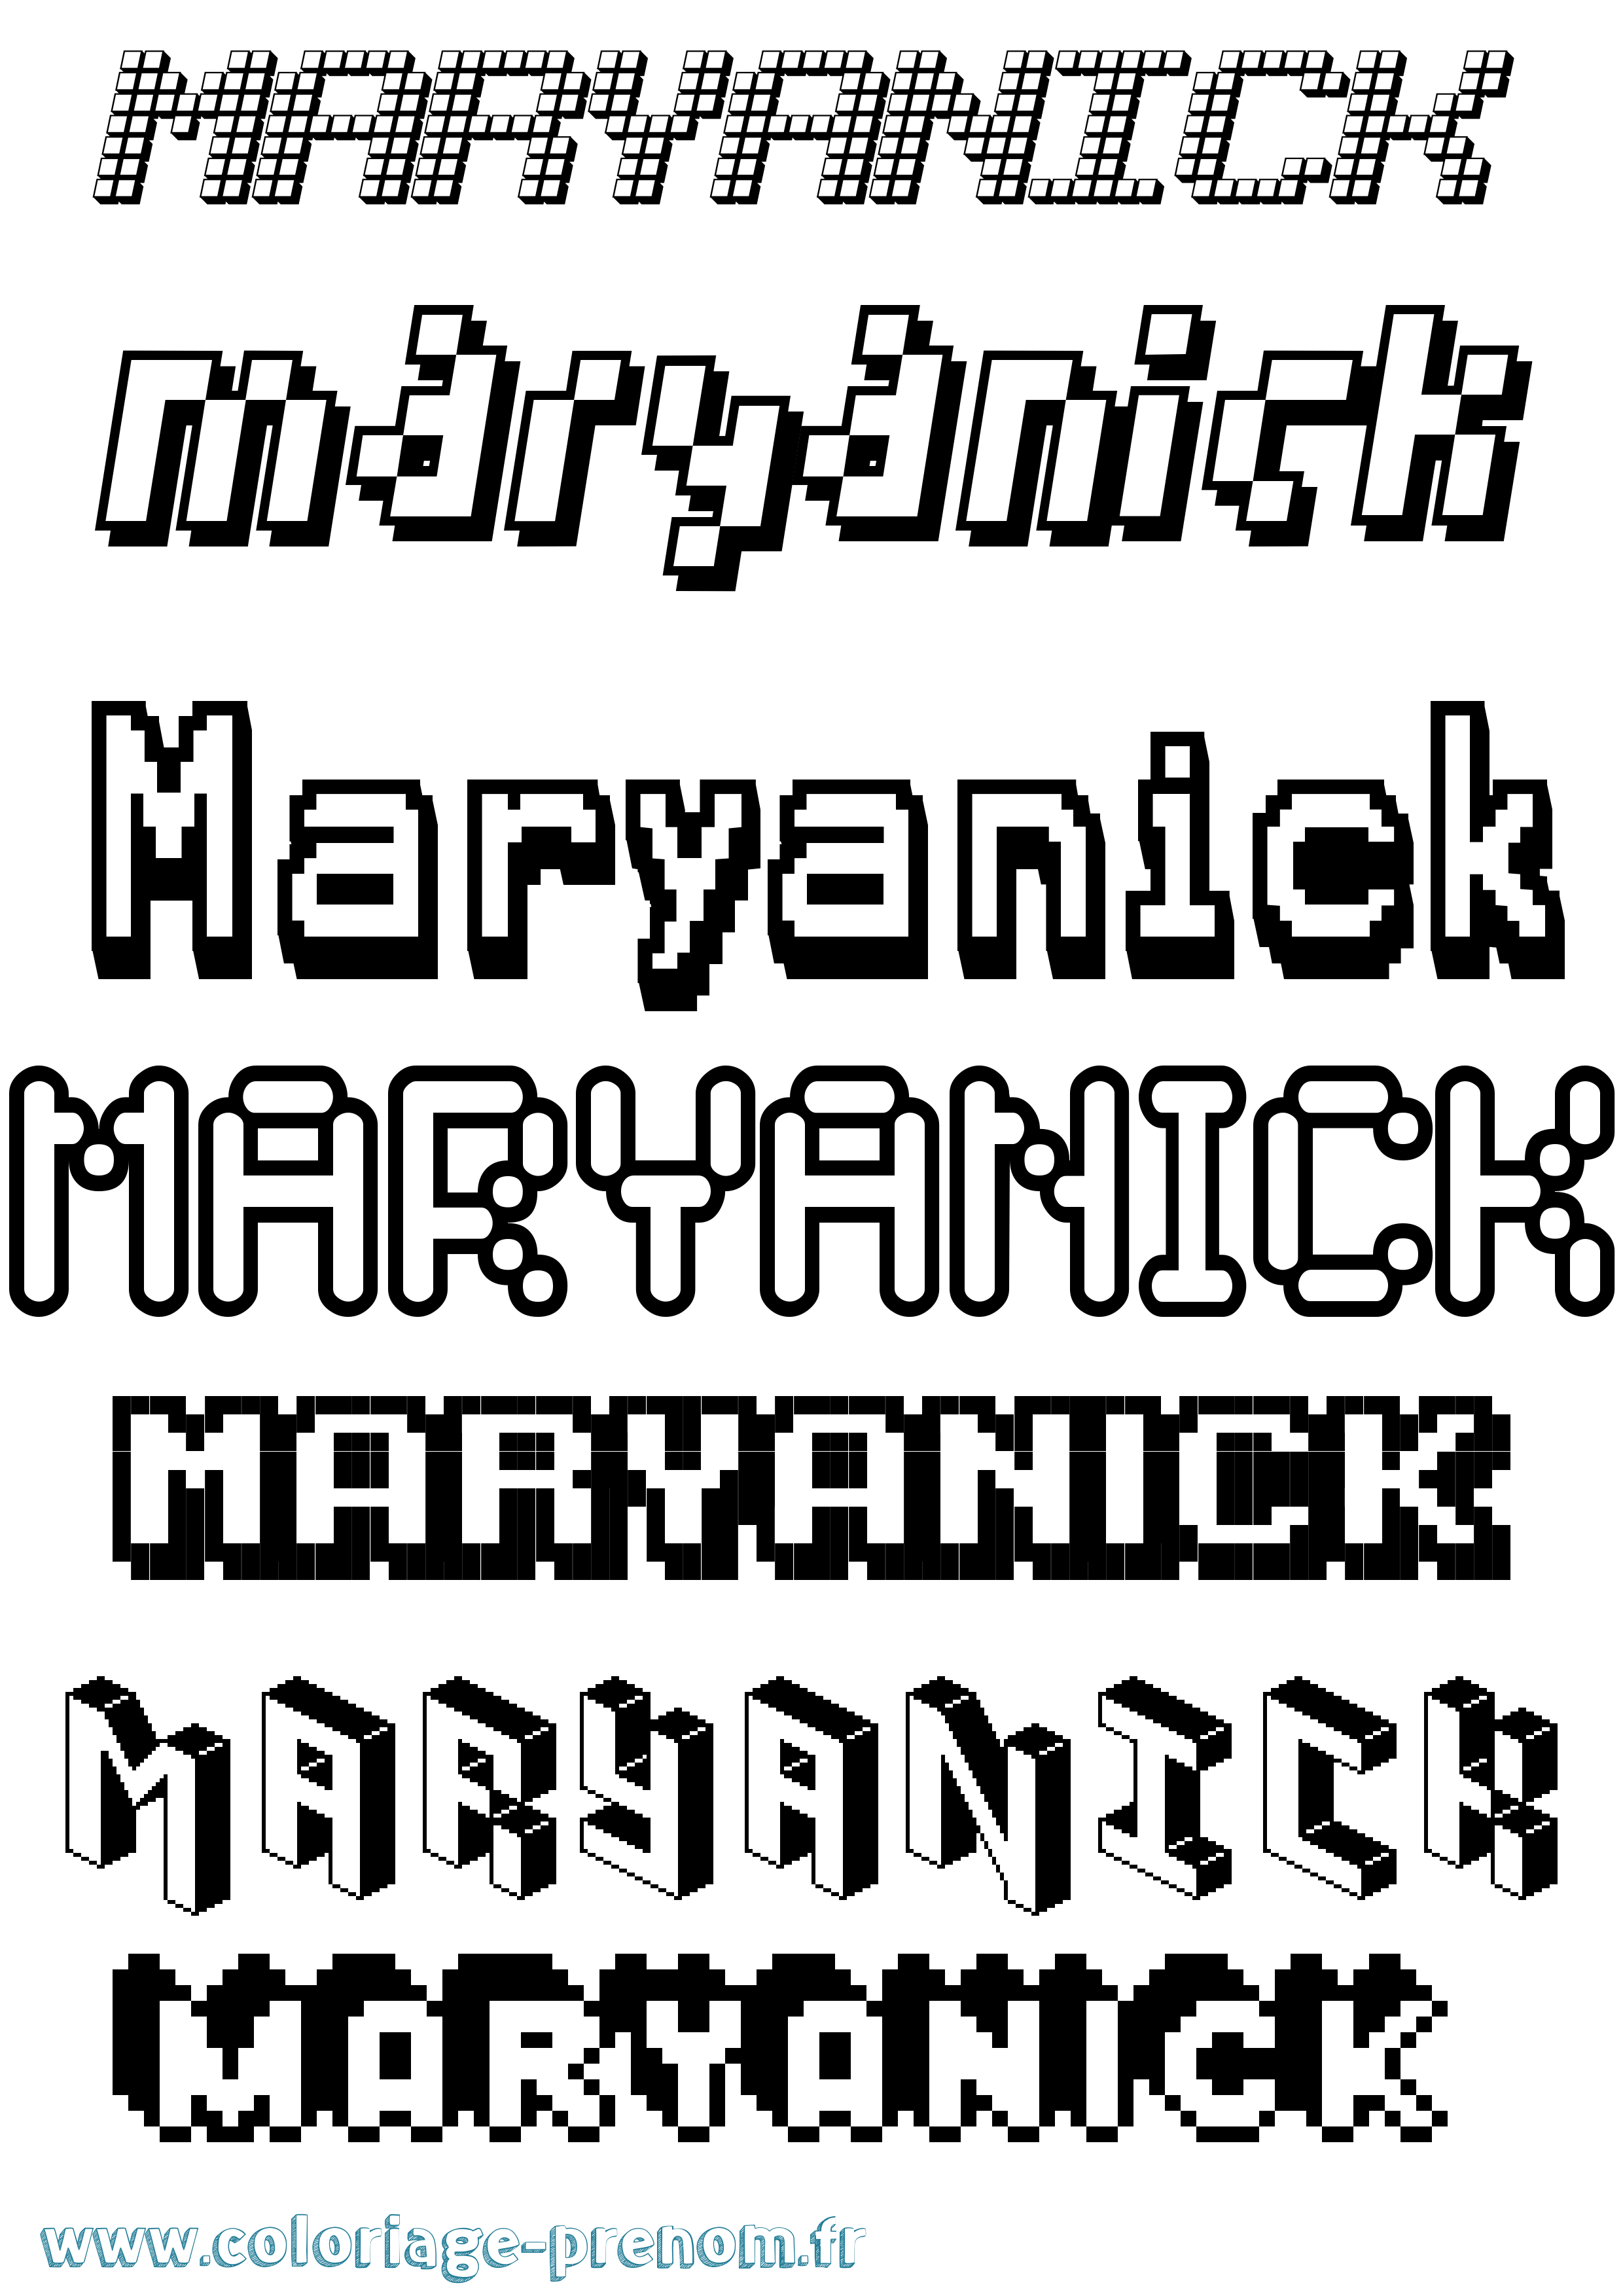 Coloriage prénom Maryanick Pixel